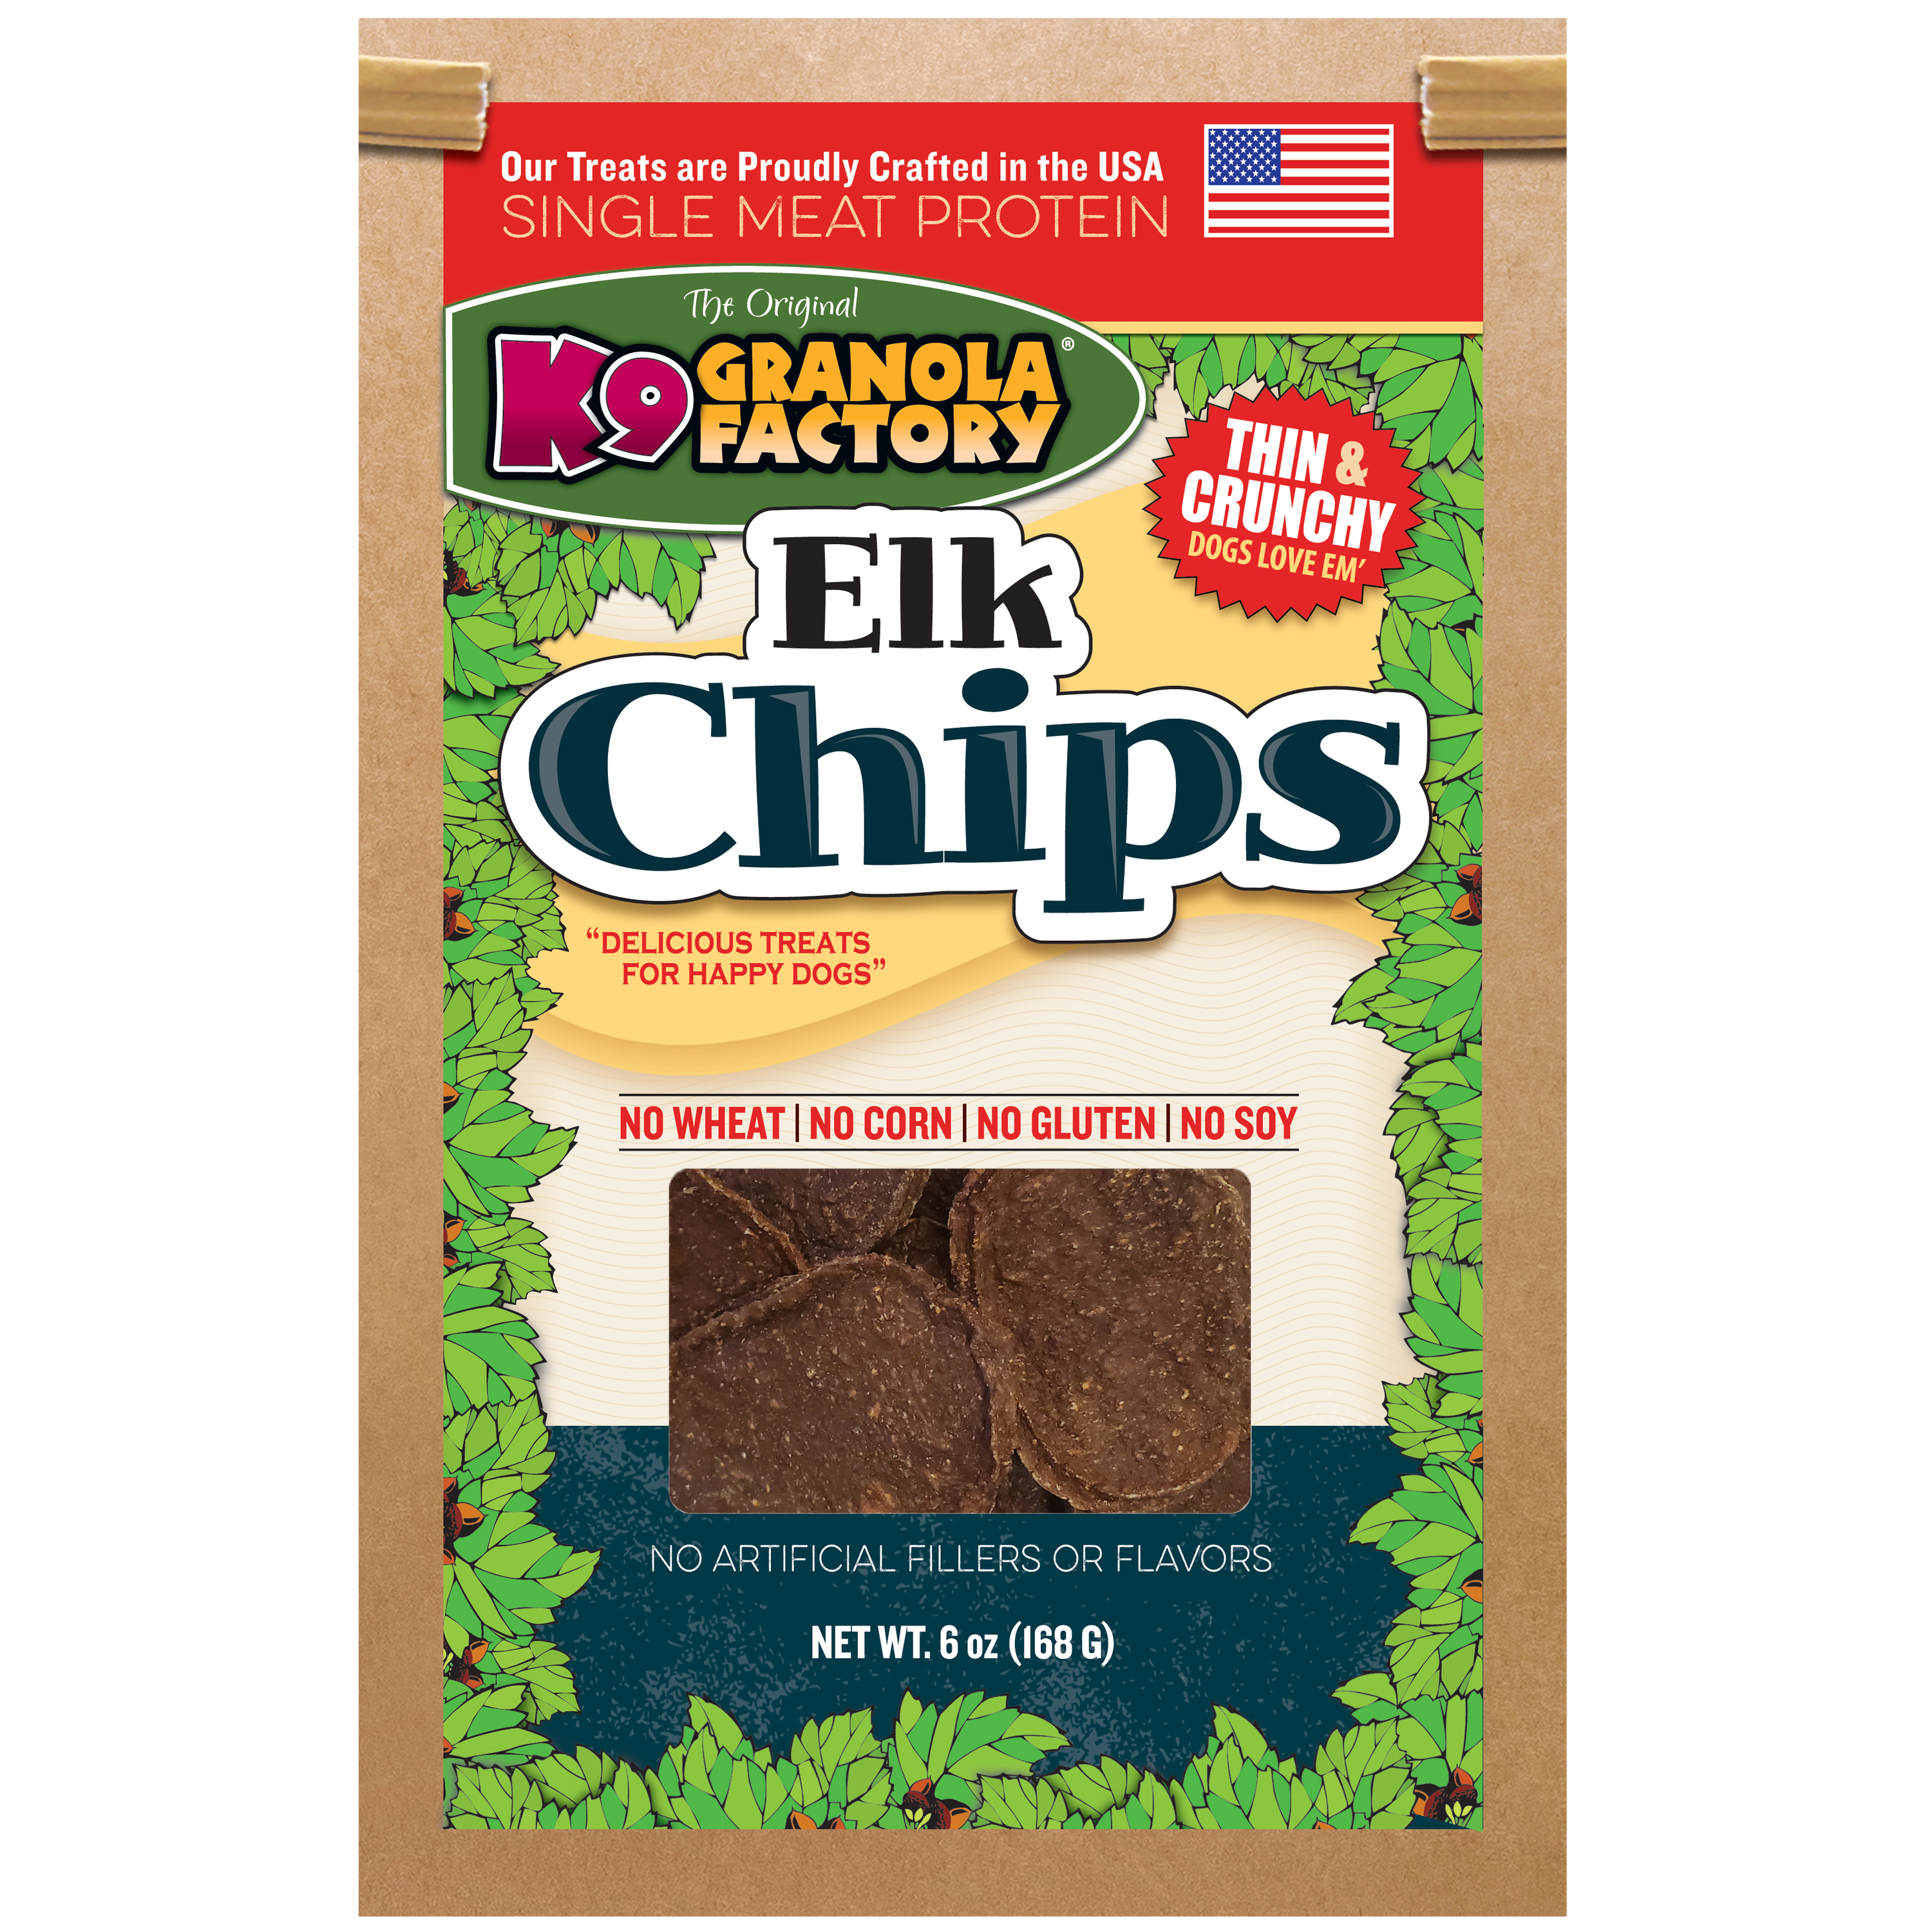 K9 Granola Factory Chip Collection Elk Chips Dog Treats, 5oz